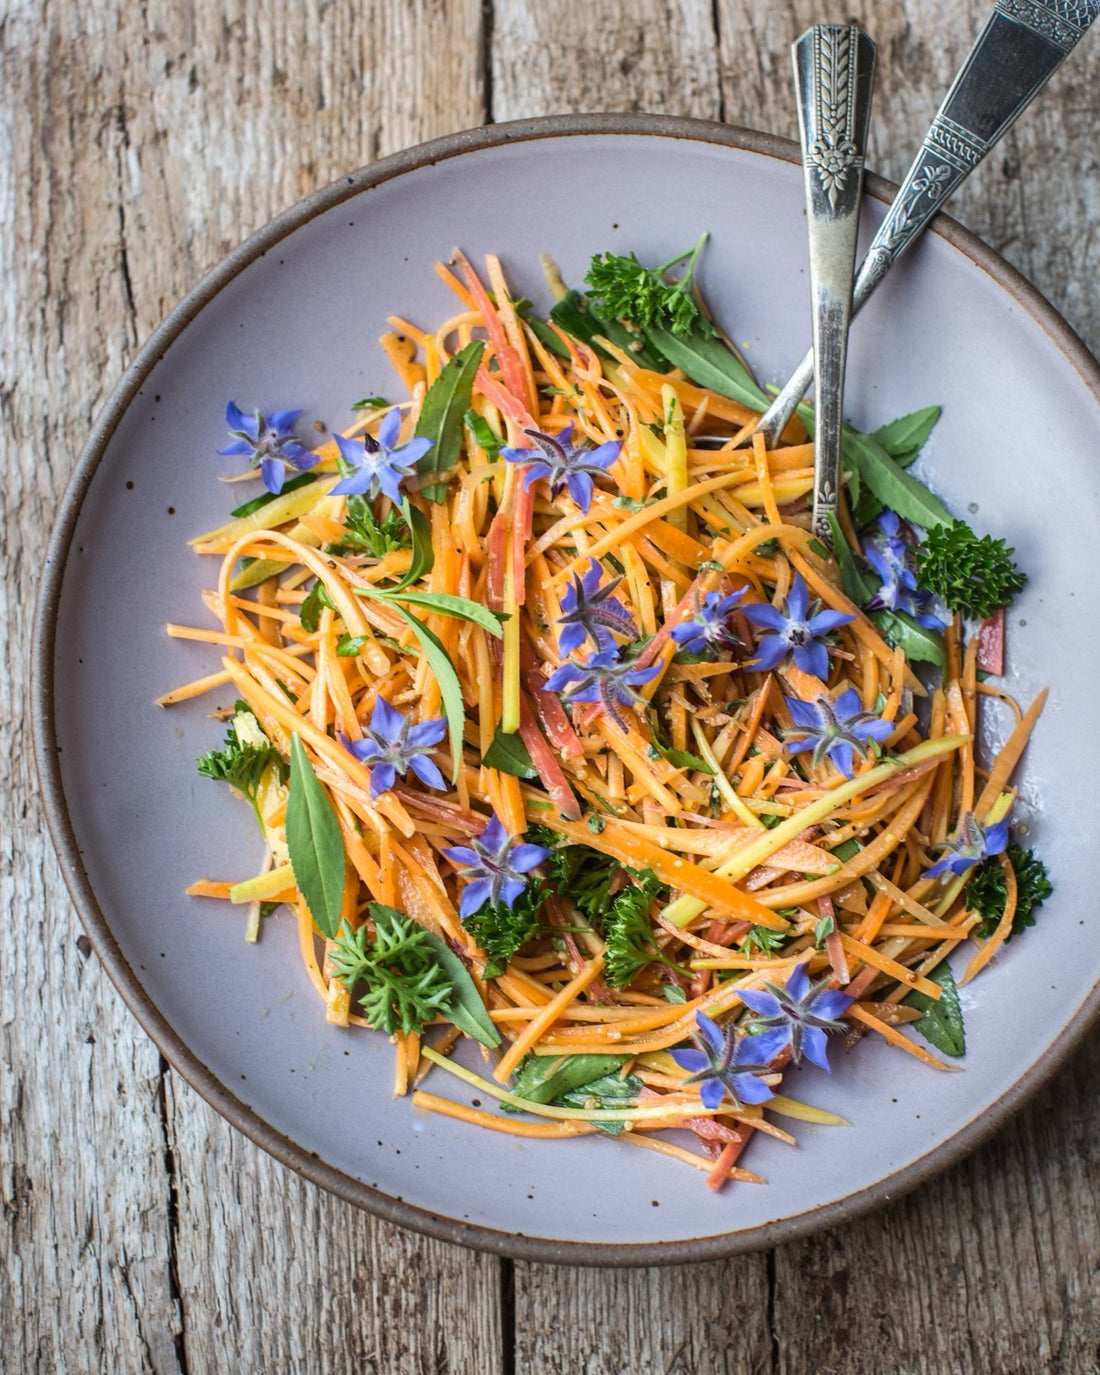 The Mississippi Vegan’s Heirloom Carrot Salad